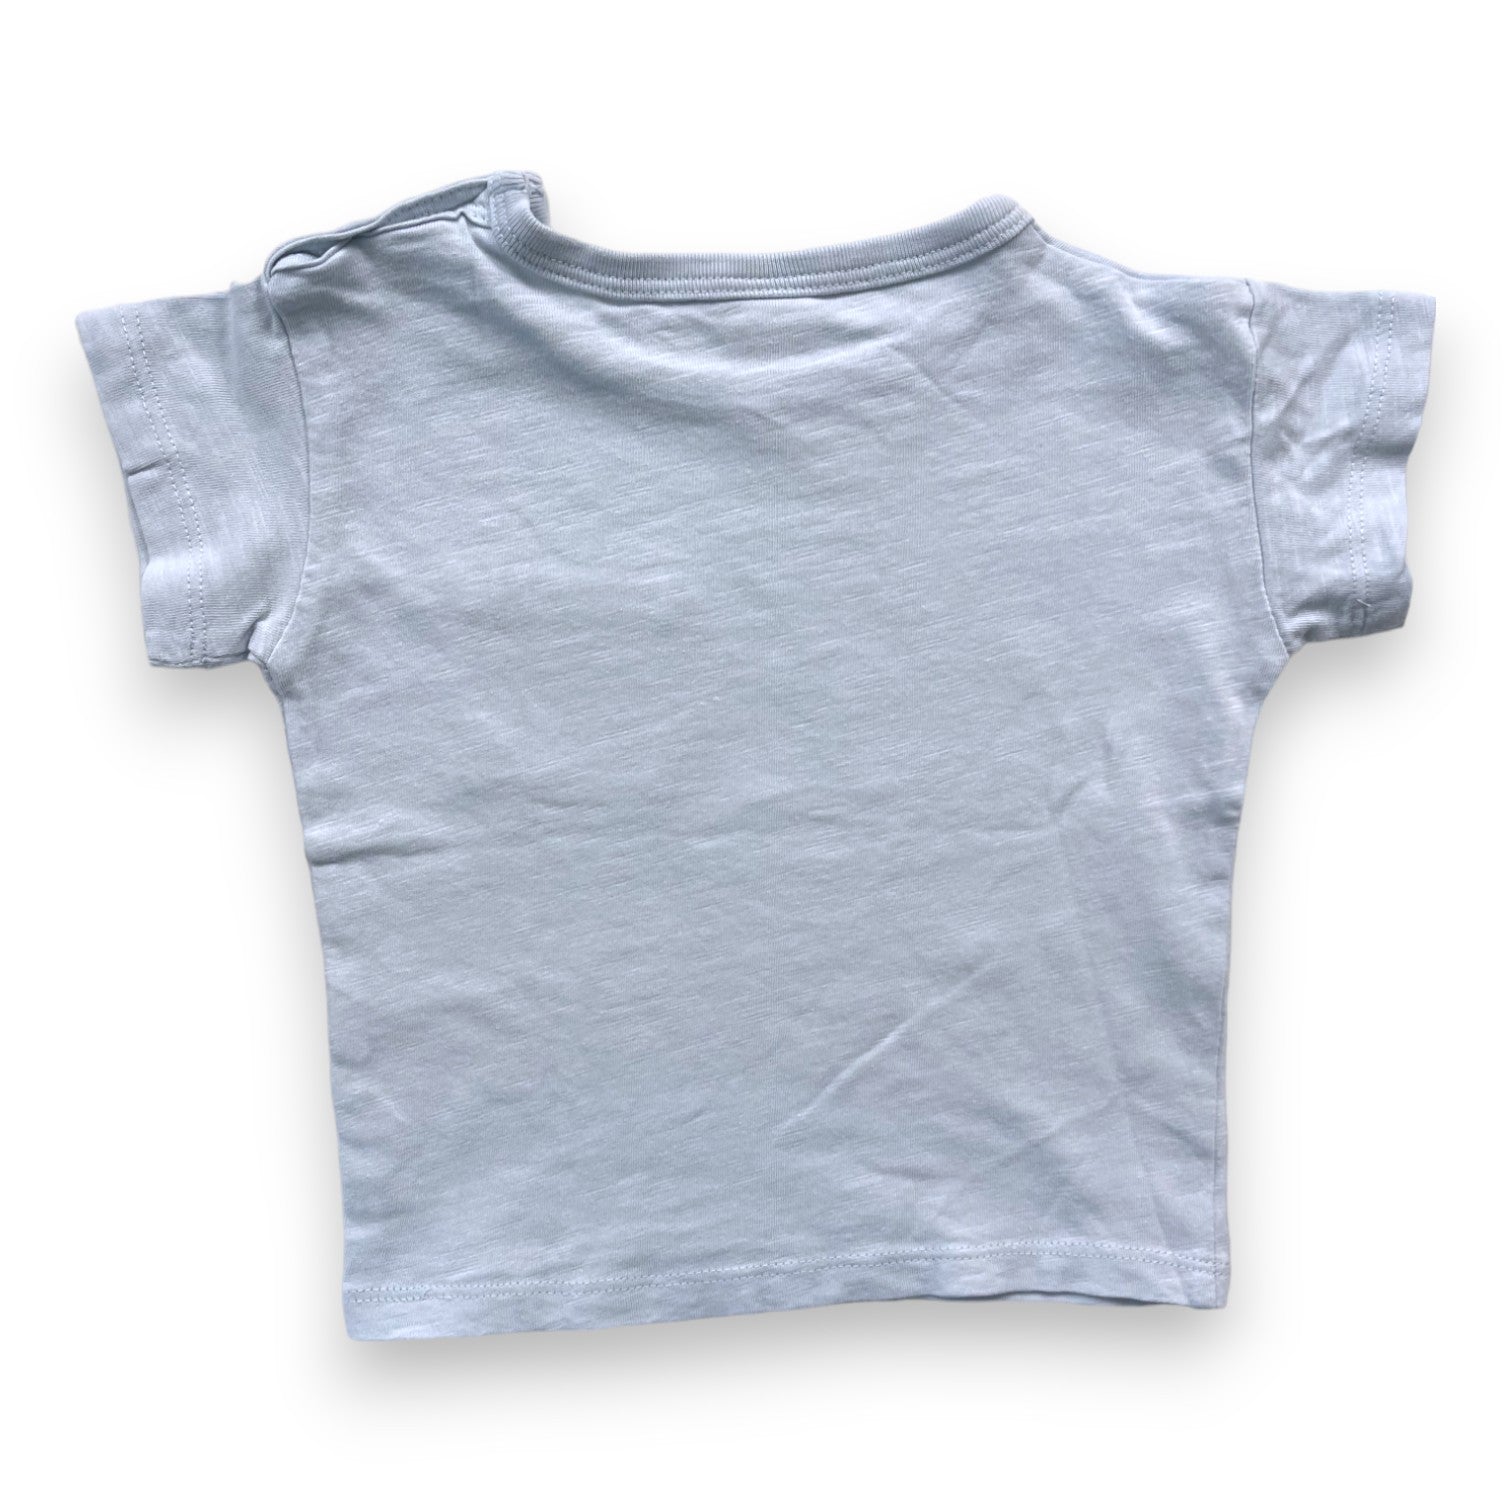 PETIT BATEAU - T shirt bleu clair - 6 mois